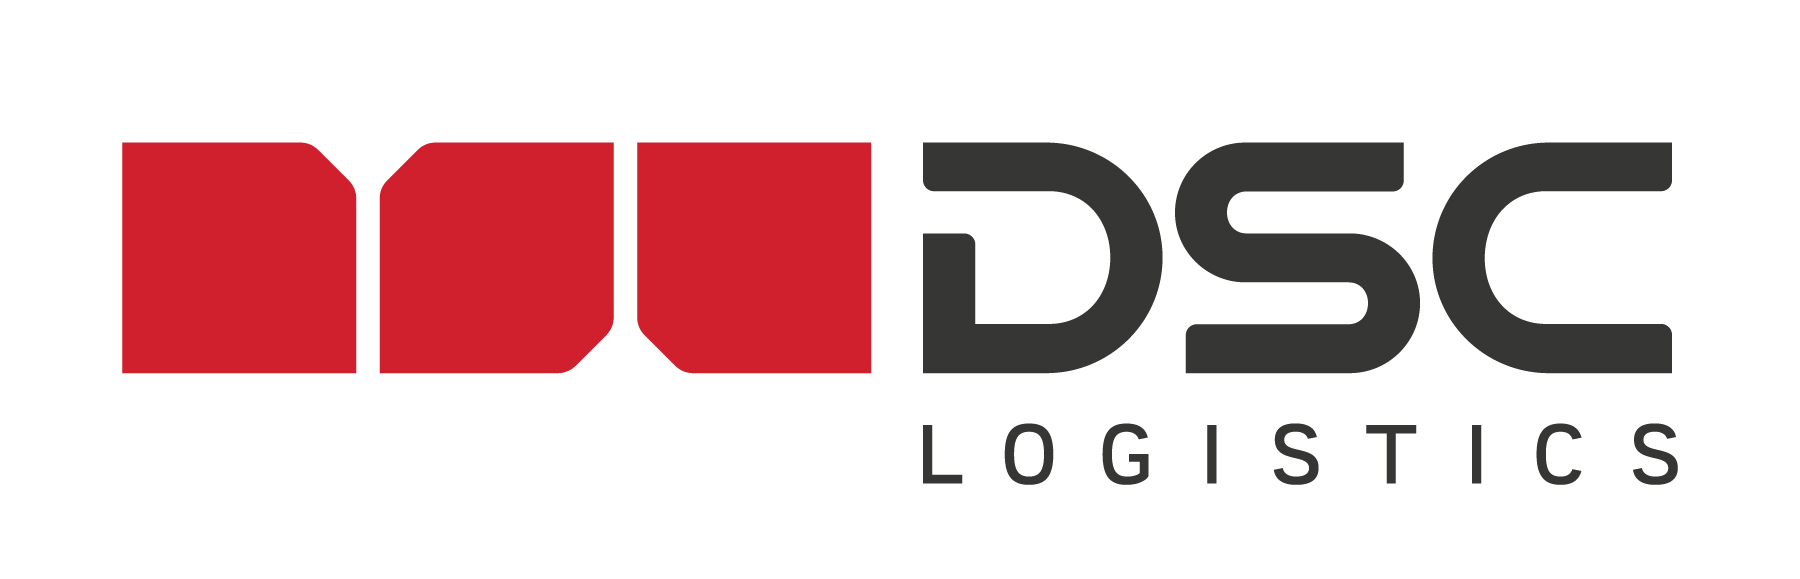 Logo Design for DSC EARTHWORKS by Brand Design Dave | Design #4127585